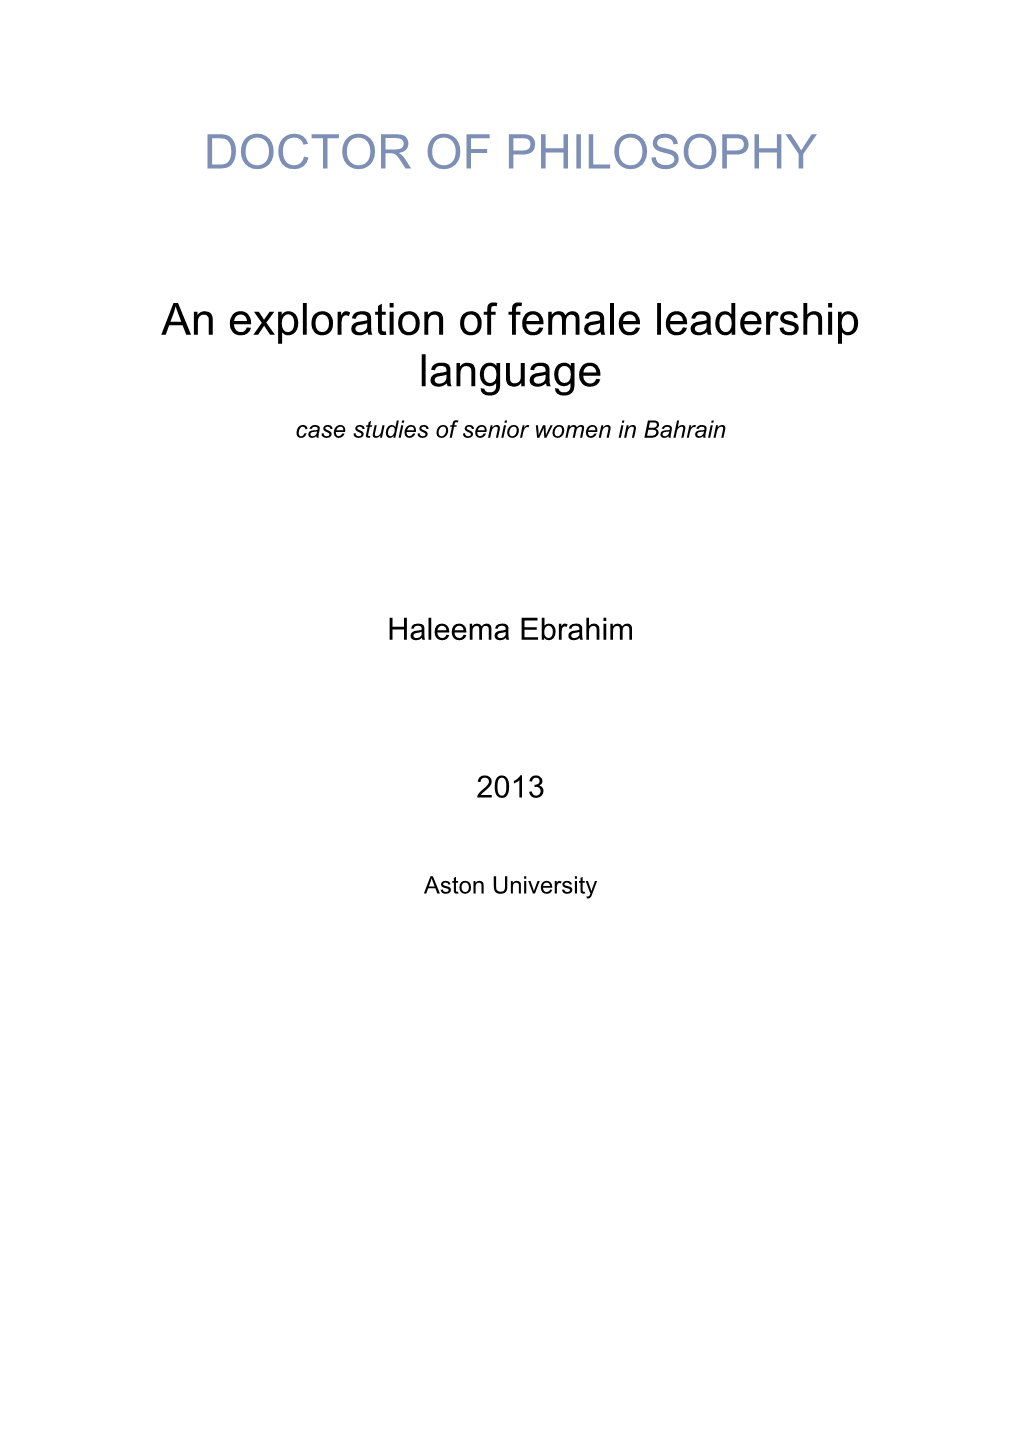 An Exploration of Female Leadership Language Case Studies of Senior Women in Bahrain